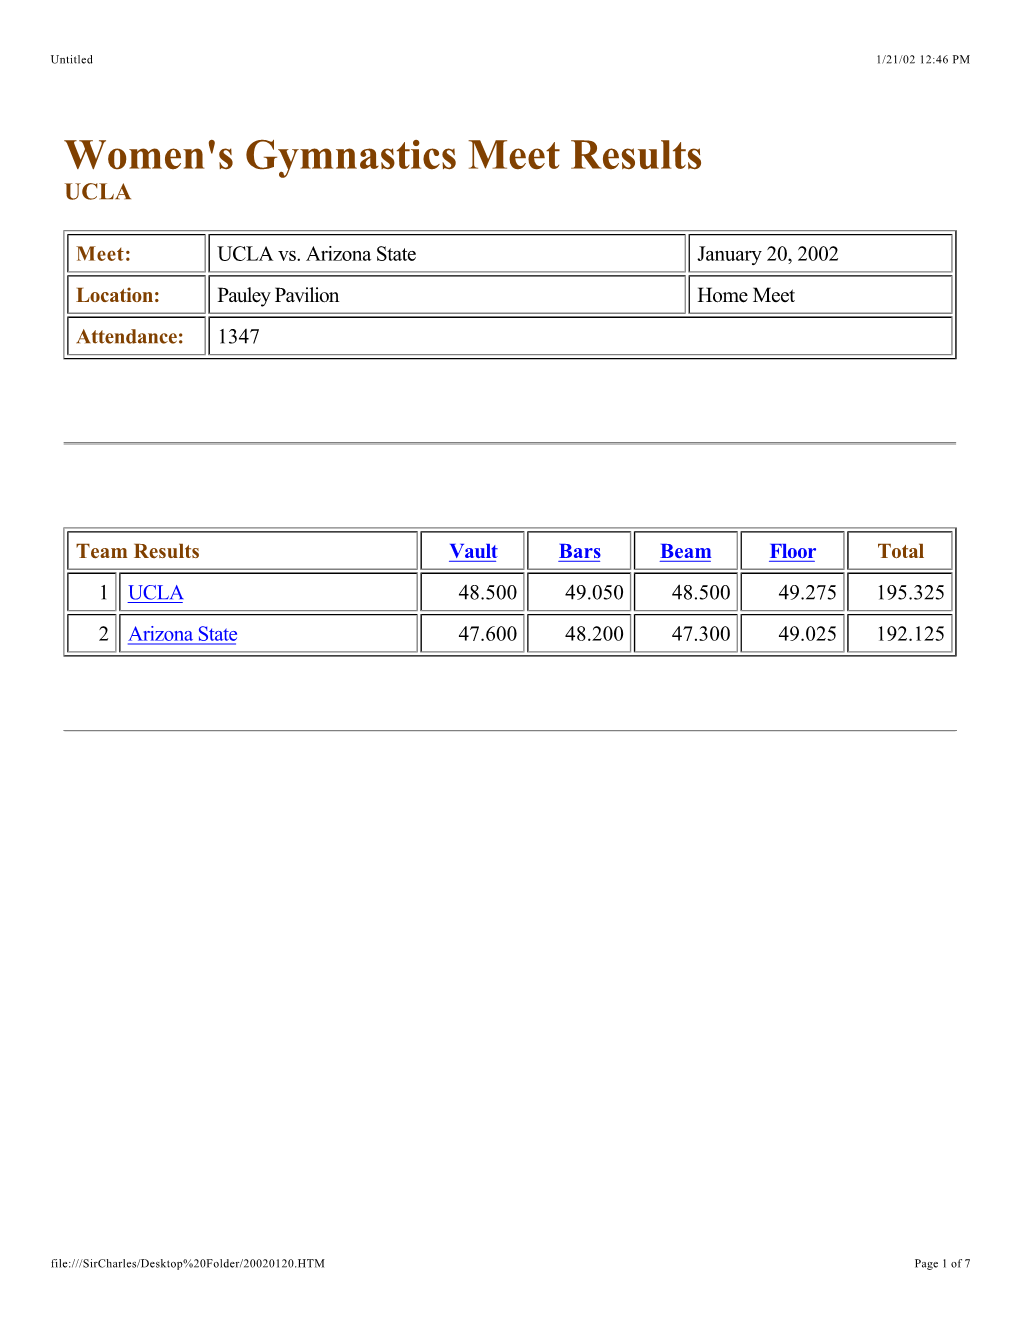 Women's Gymnastics Meet Results UCLA